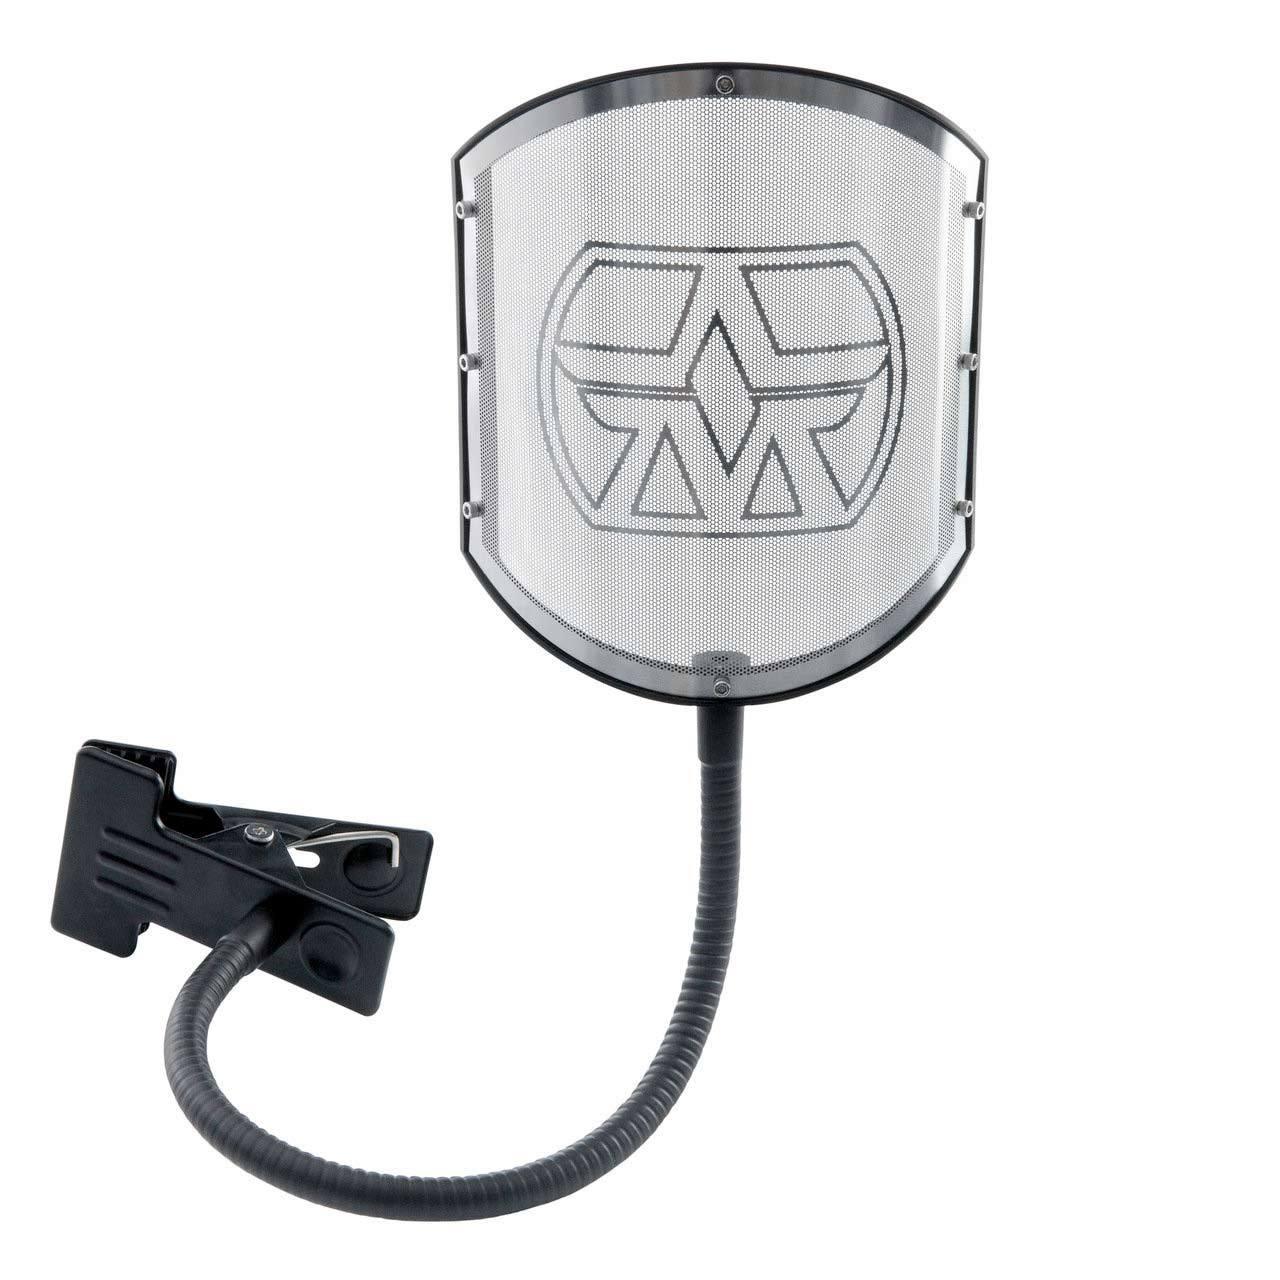 Microphone Accessories - Aston Shield GN - Steel Mesh Pop Filter